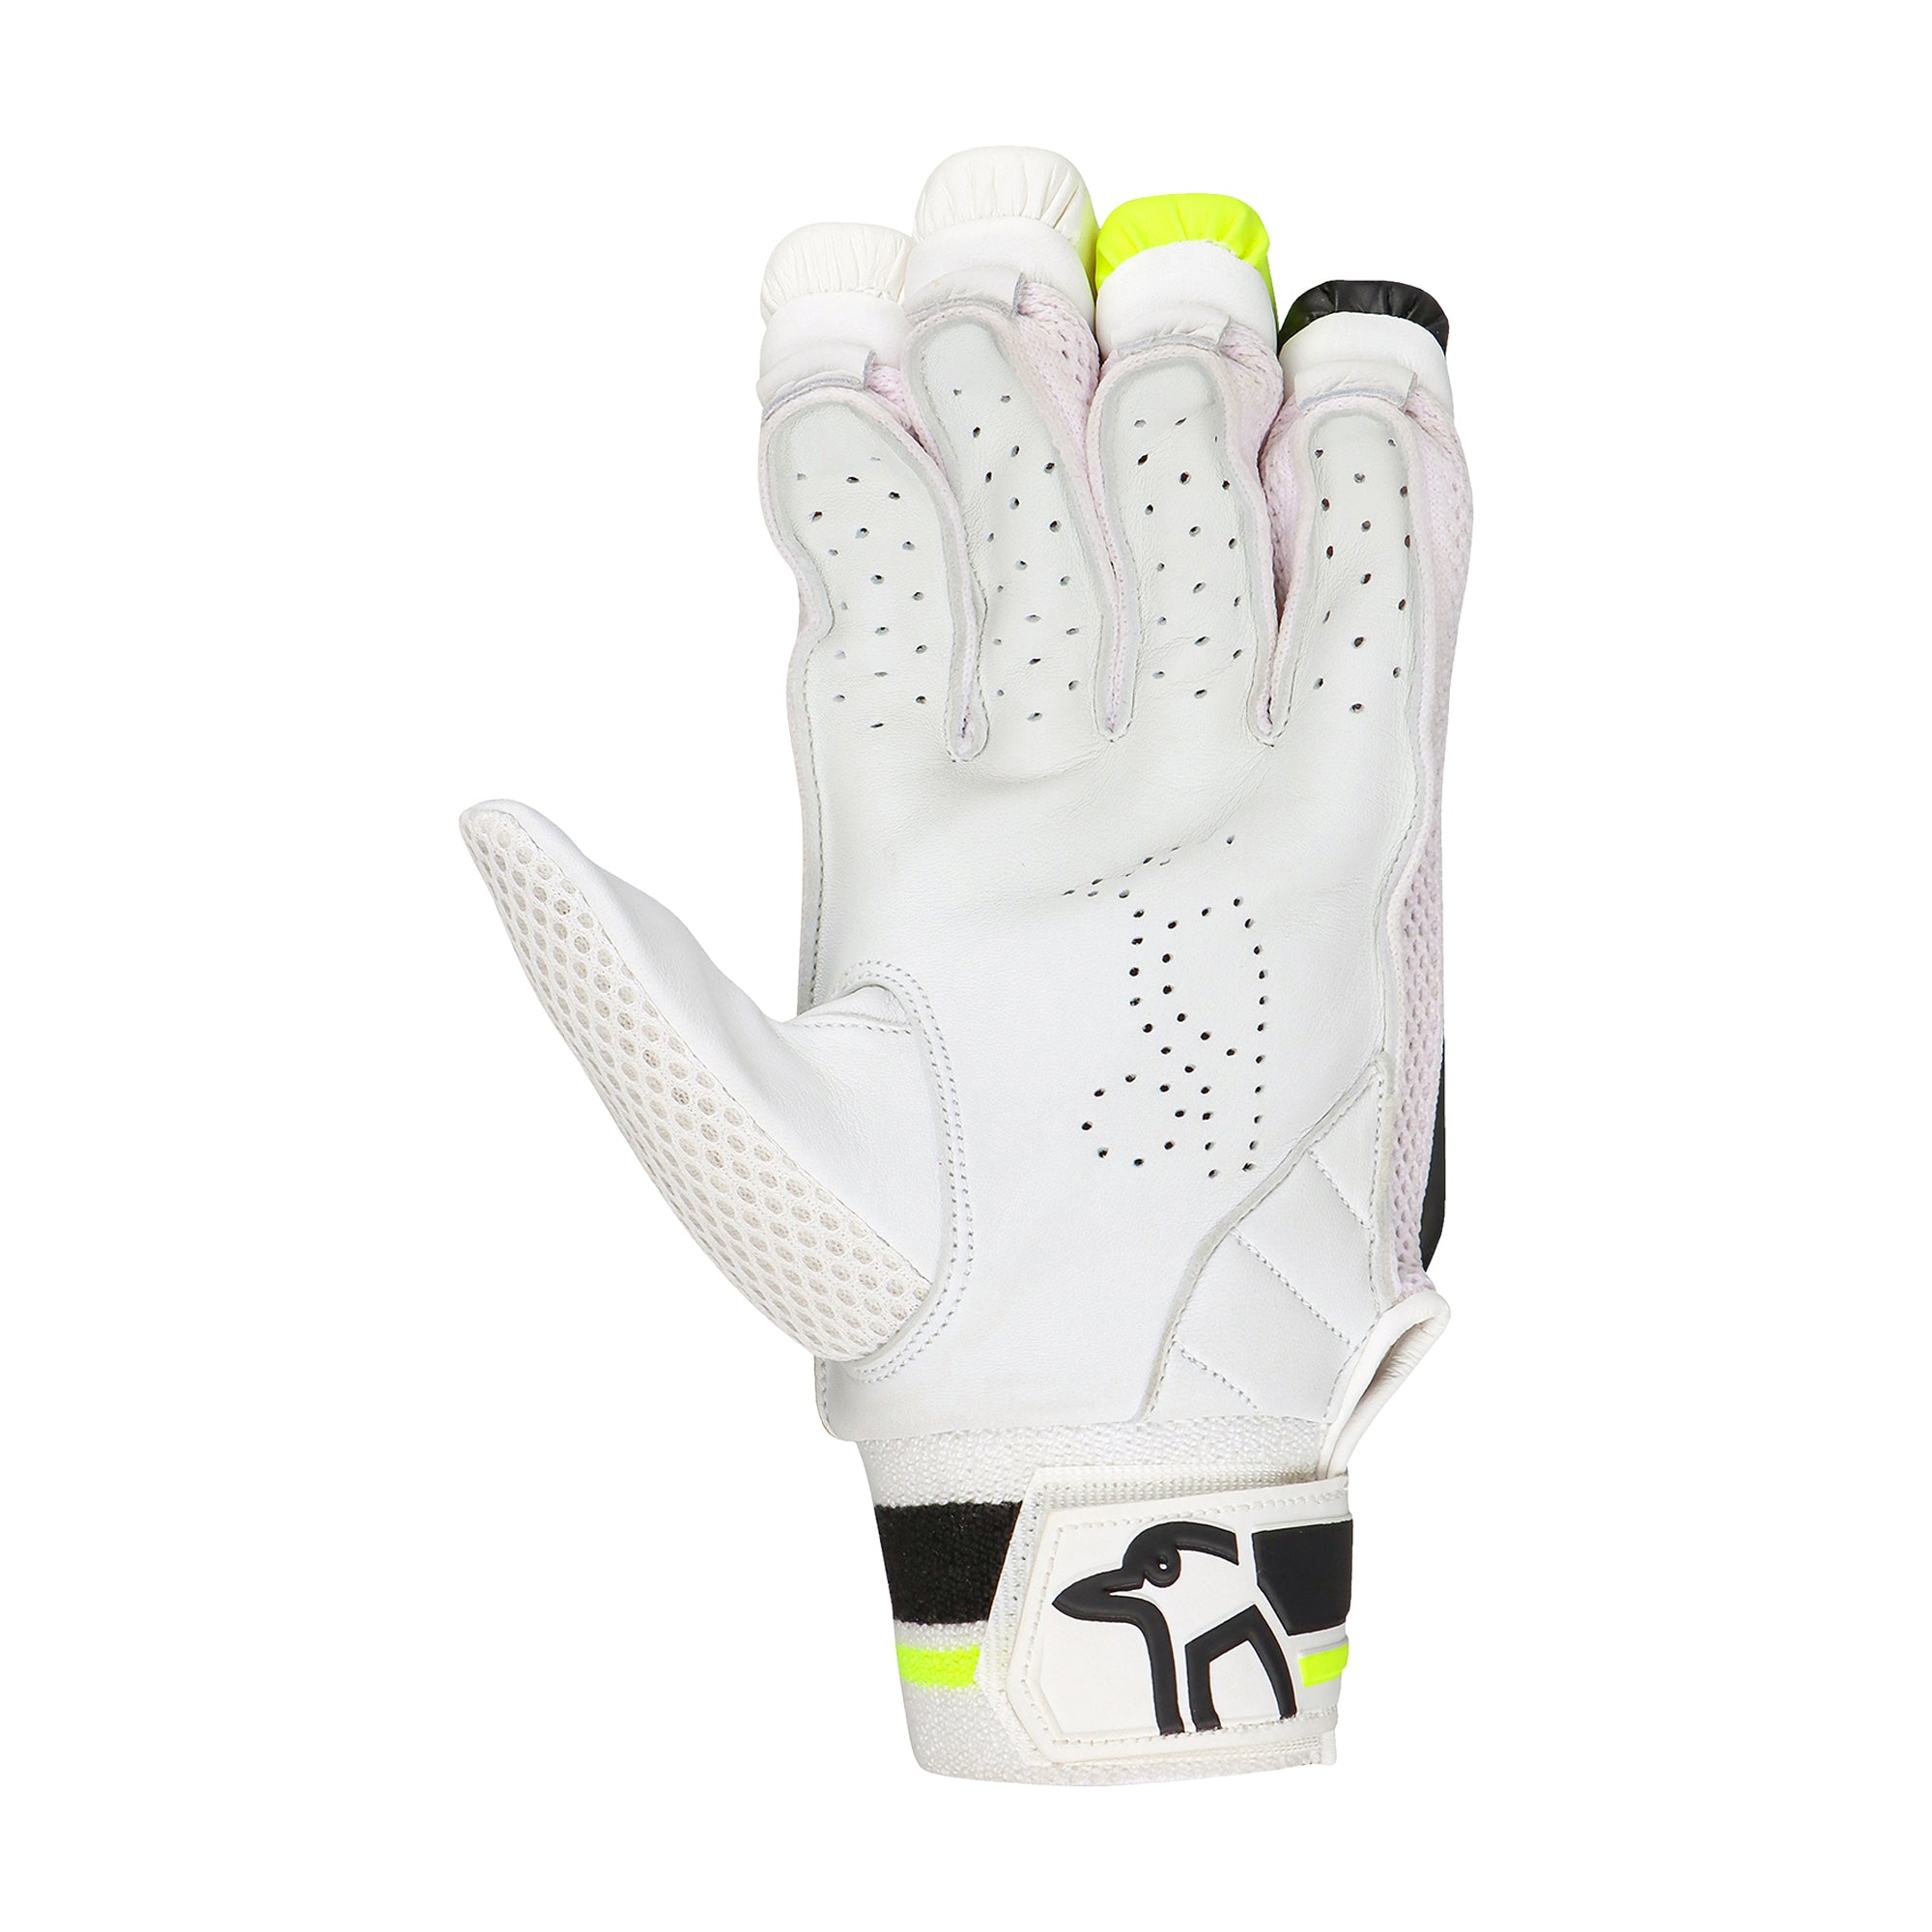 Kookaburra Beast 2.0 Cricket Batting Gloves